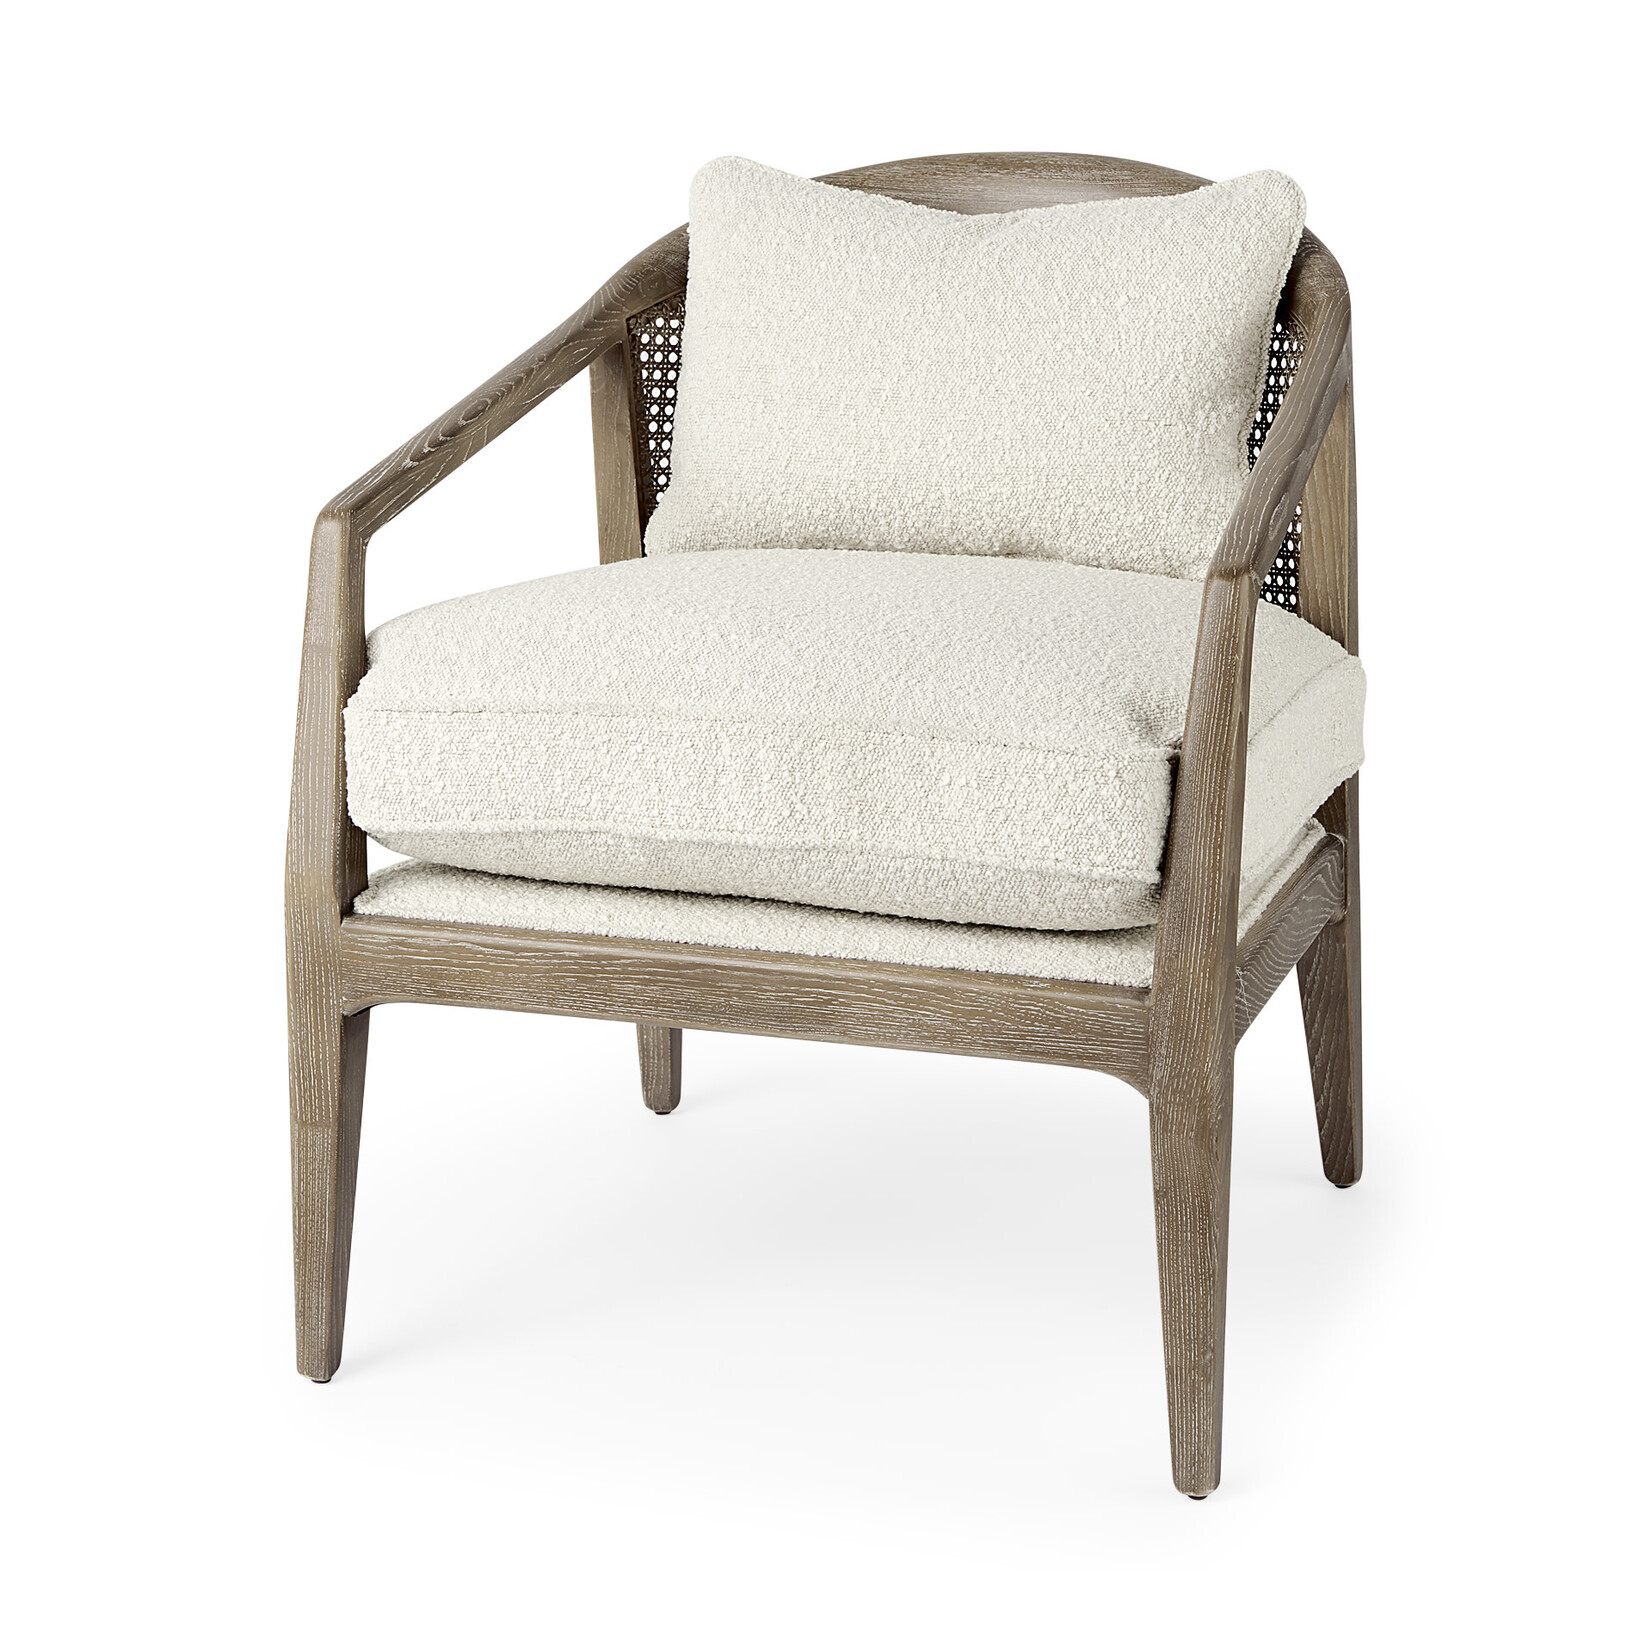 Landon - Light Brown Wood with Cream Fabric Seat